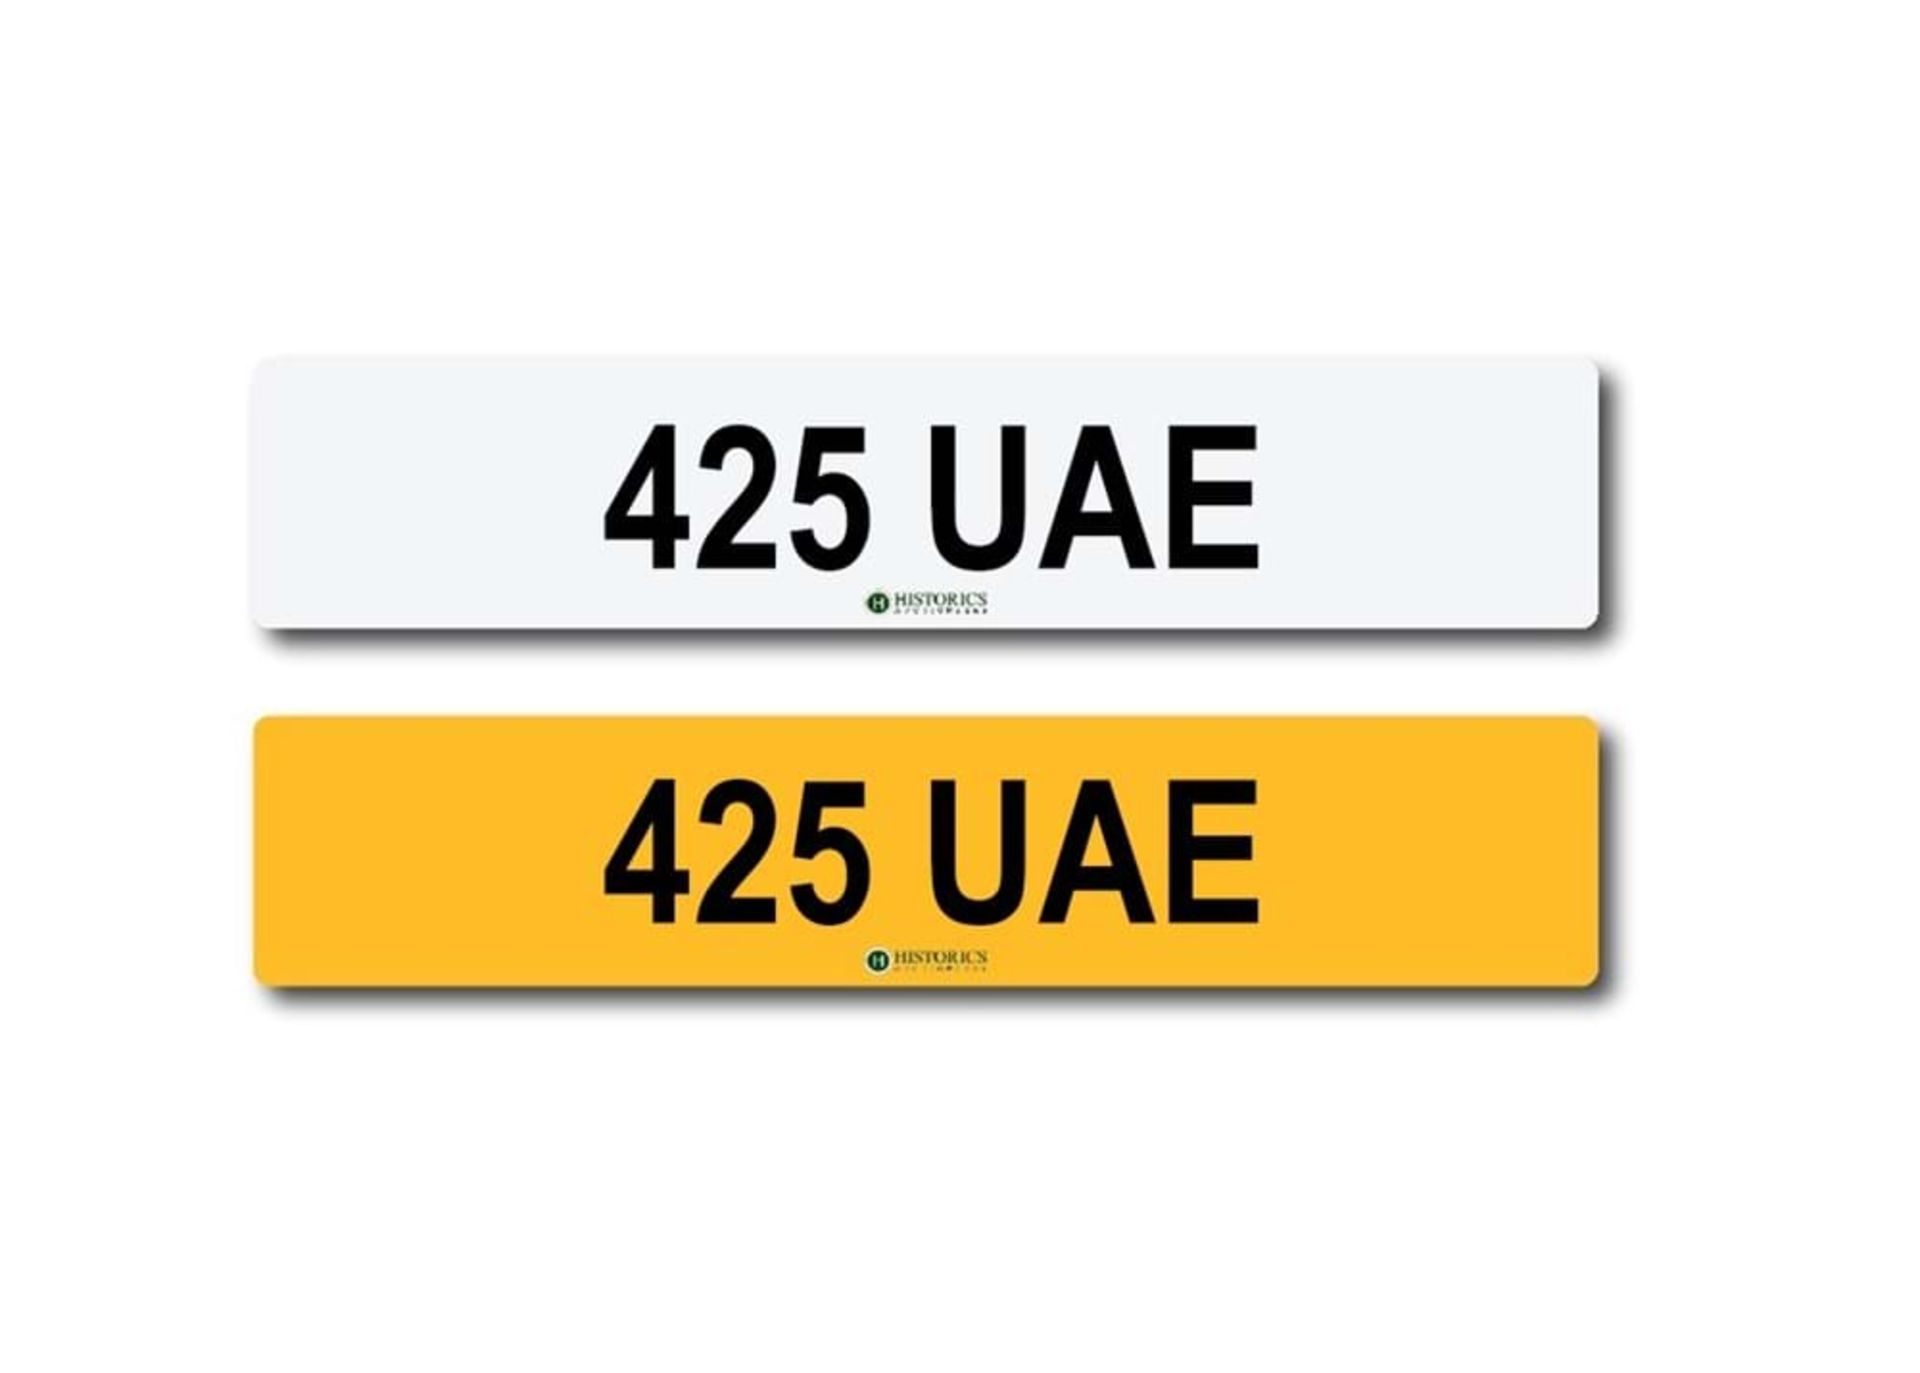 Registration 425 UAE